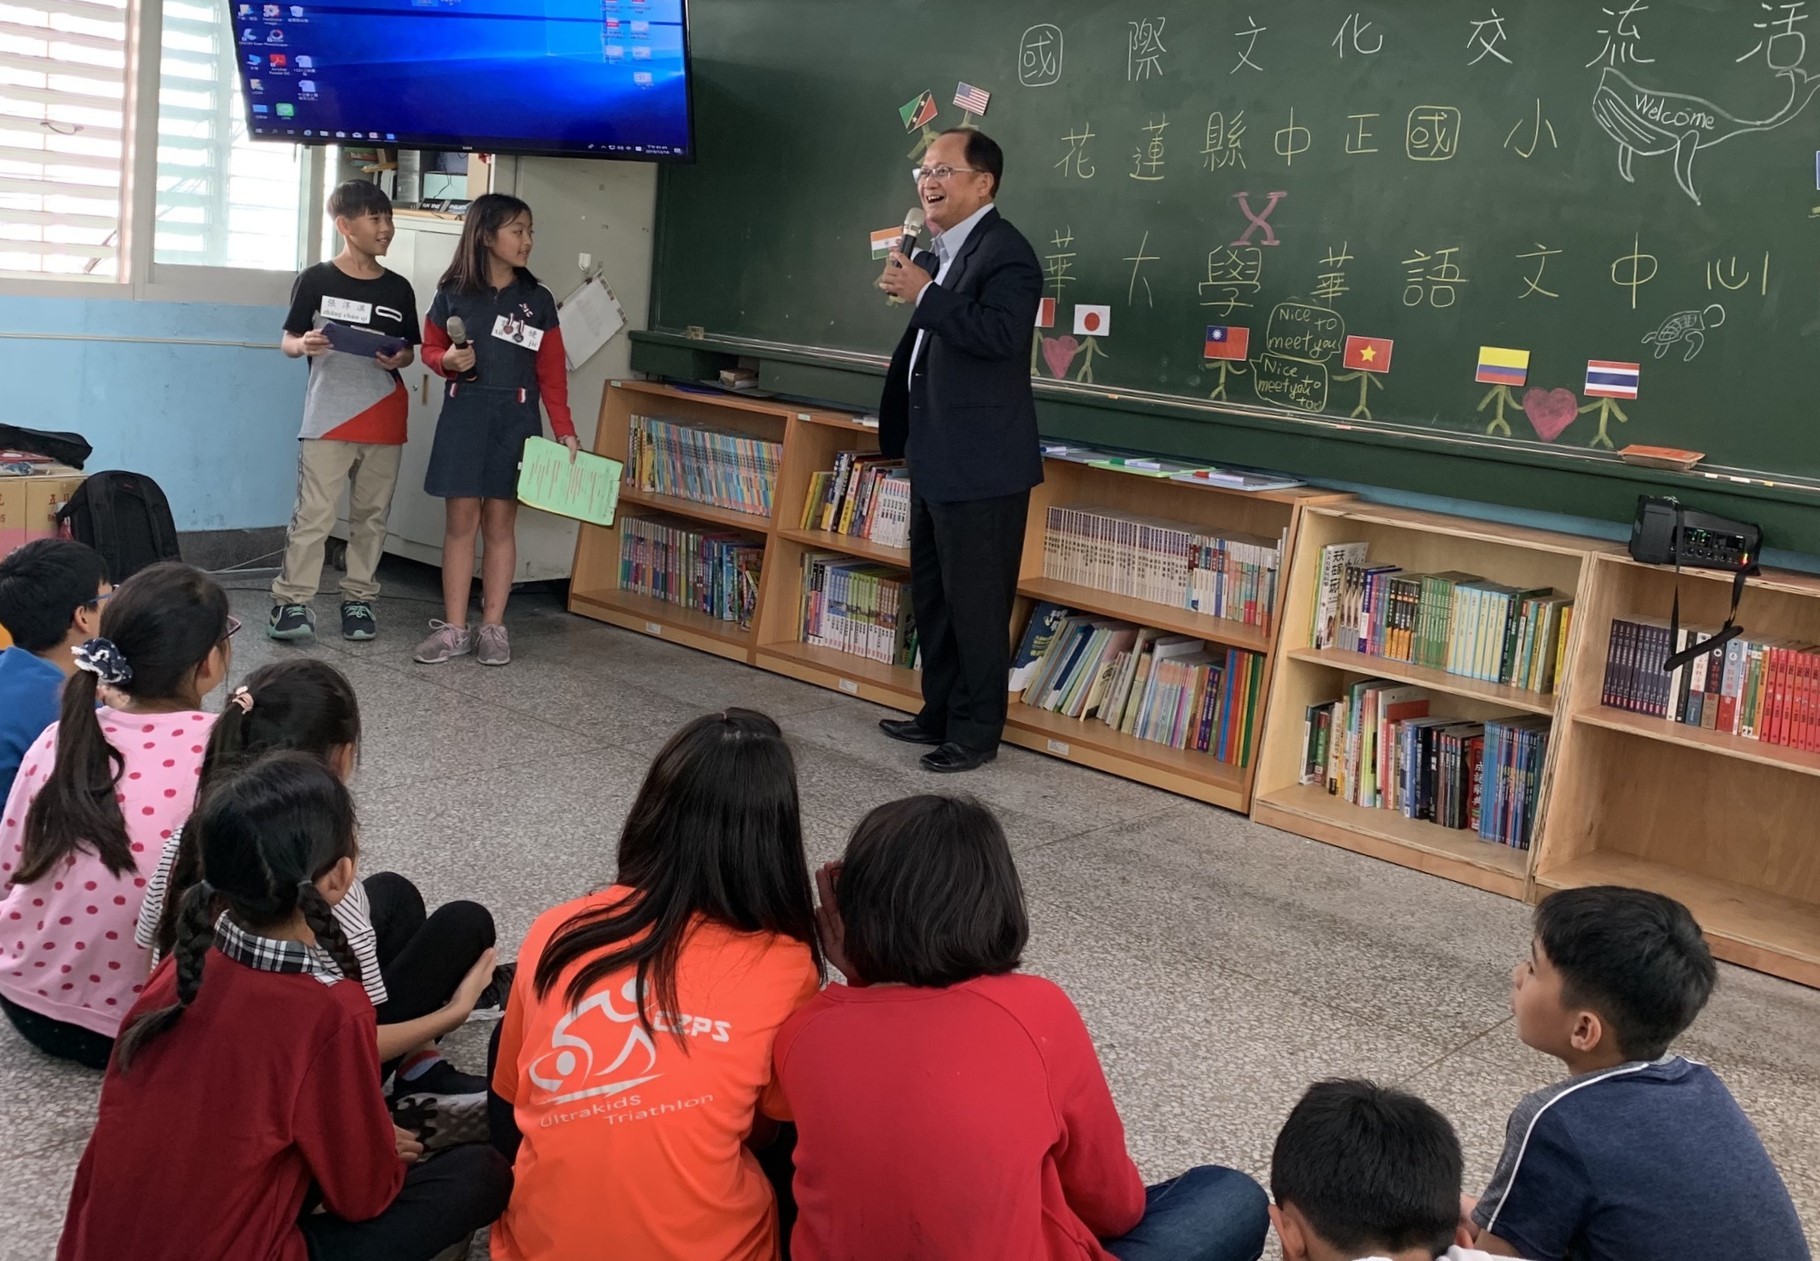 Principal from Zhong Zheng Elementary school, Chen Rong Yang, Welcoming CLC students